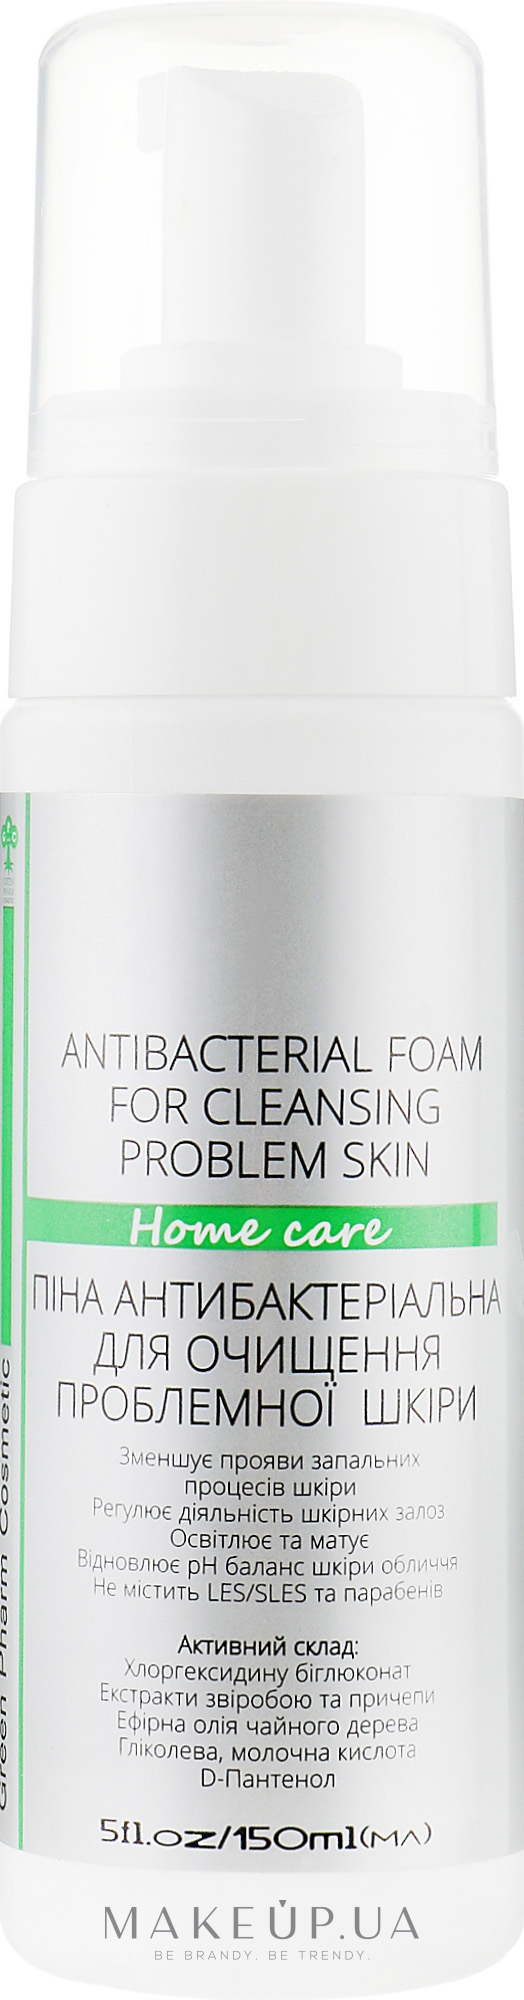 Пена антибактериальная для очистки проблемной кожи - Green Pharm Cosmetic Antibacterial Foam РН 3,5 — фото 150ml